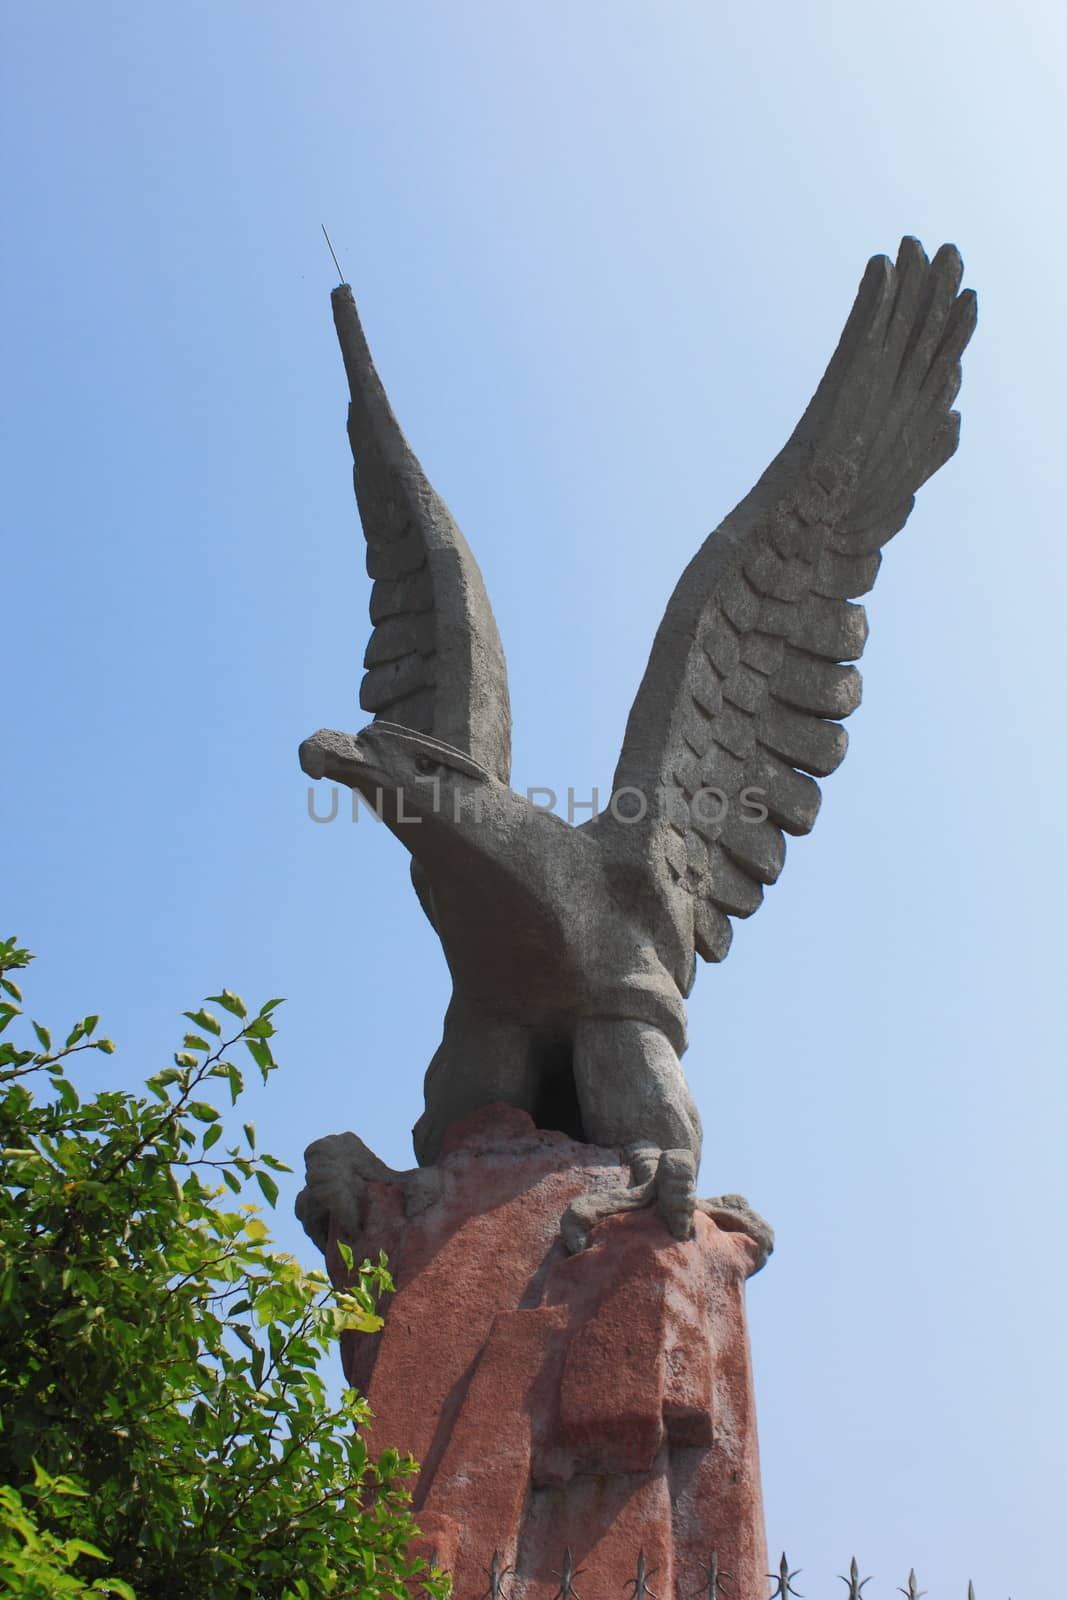 sculpture of eagle under the blue sky.